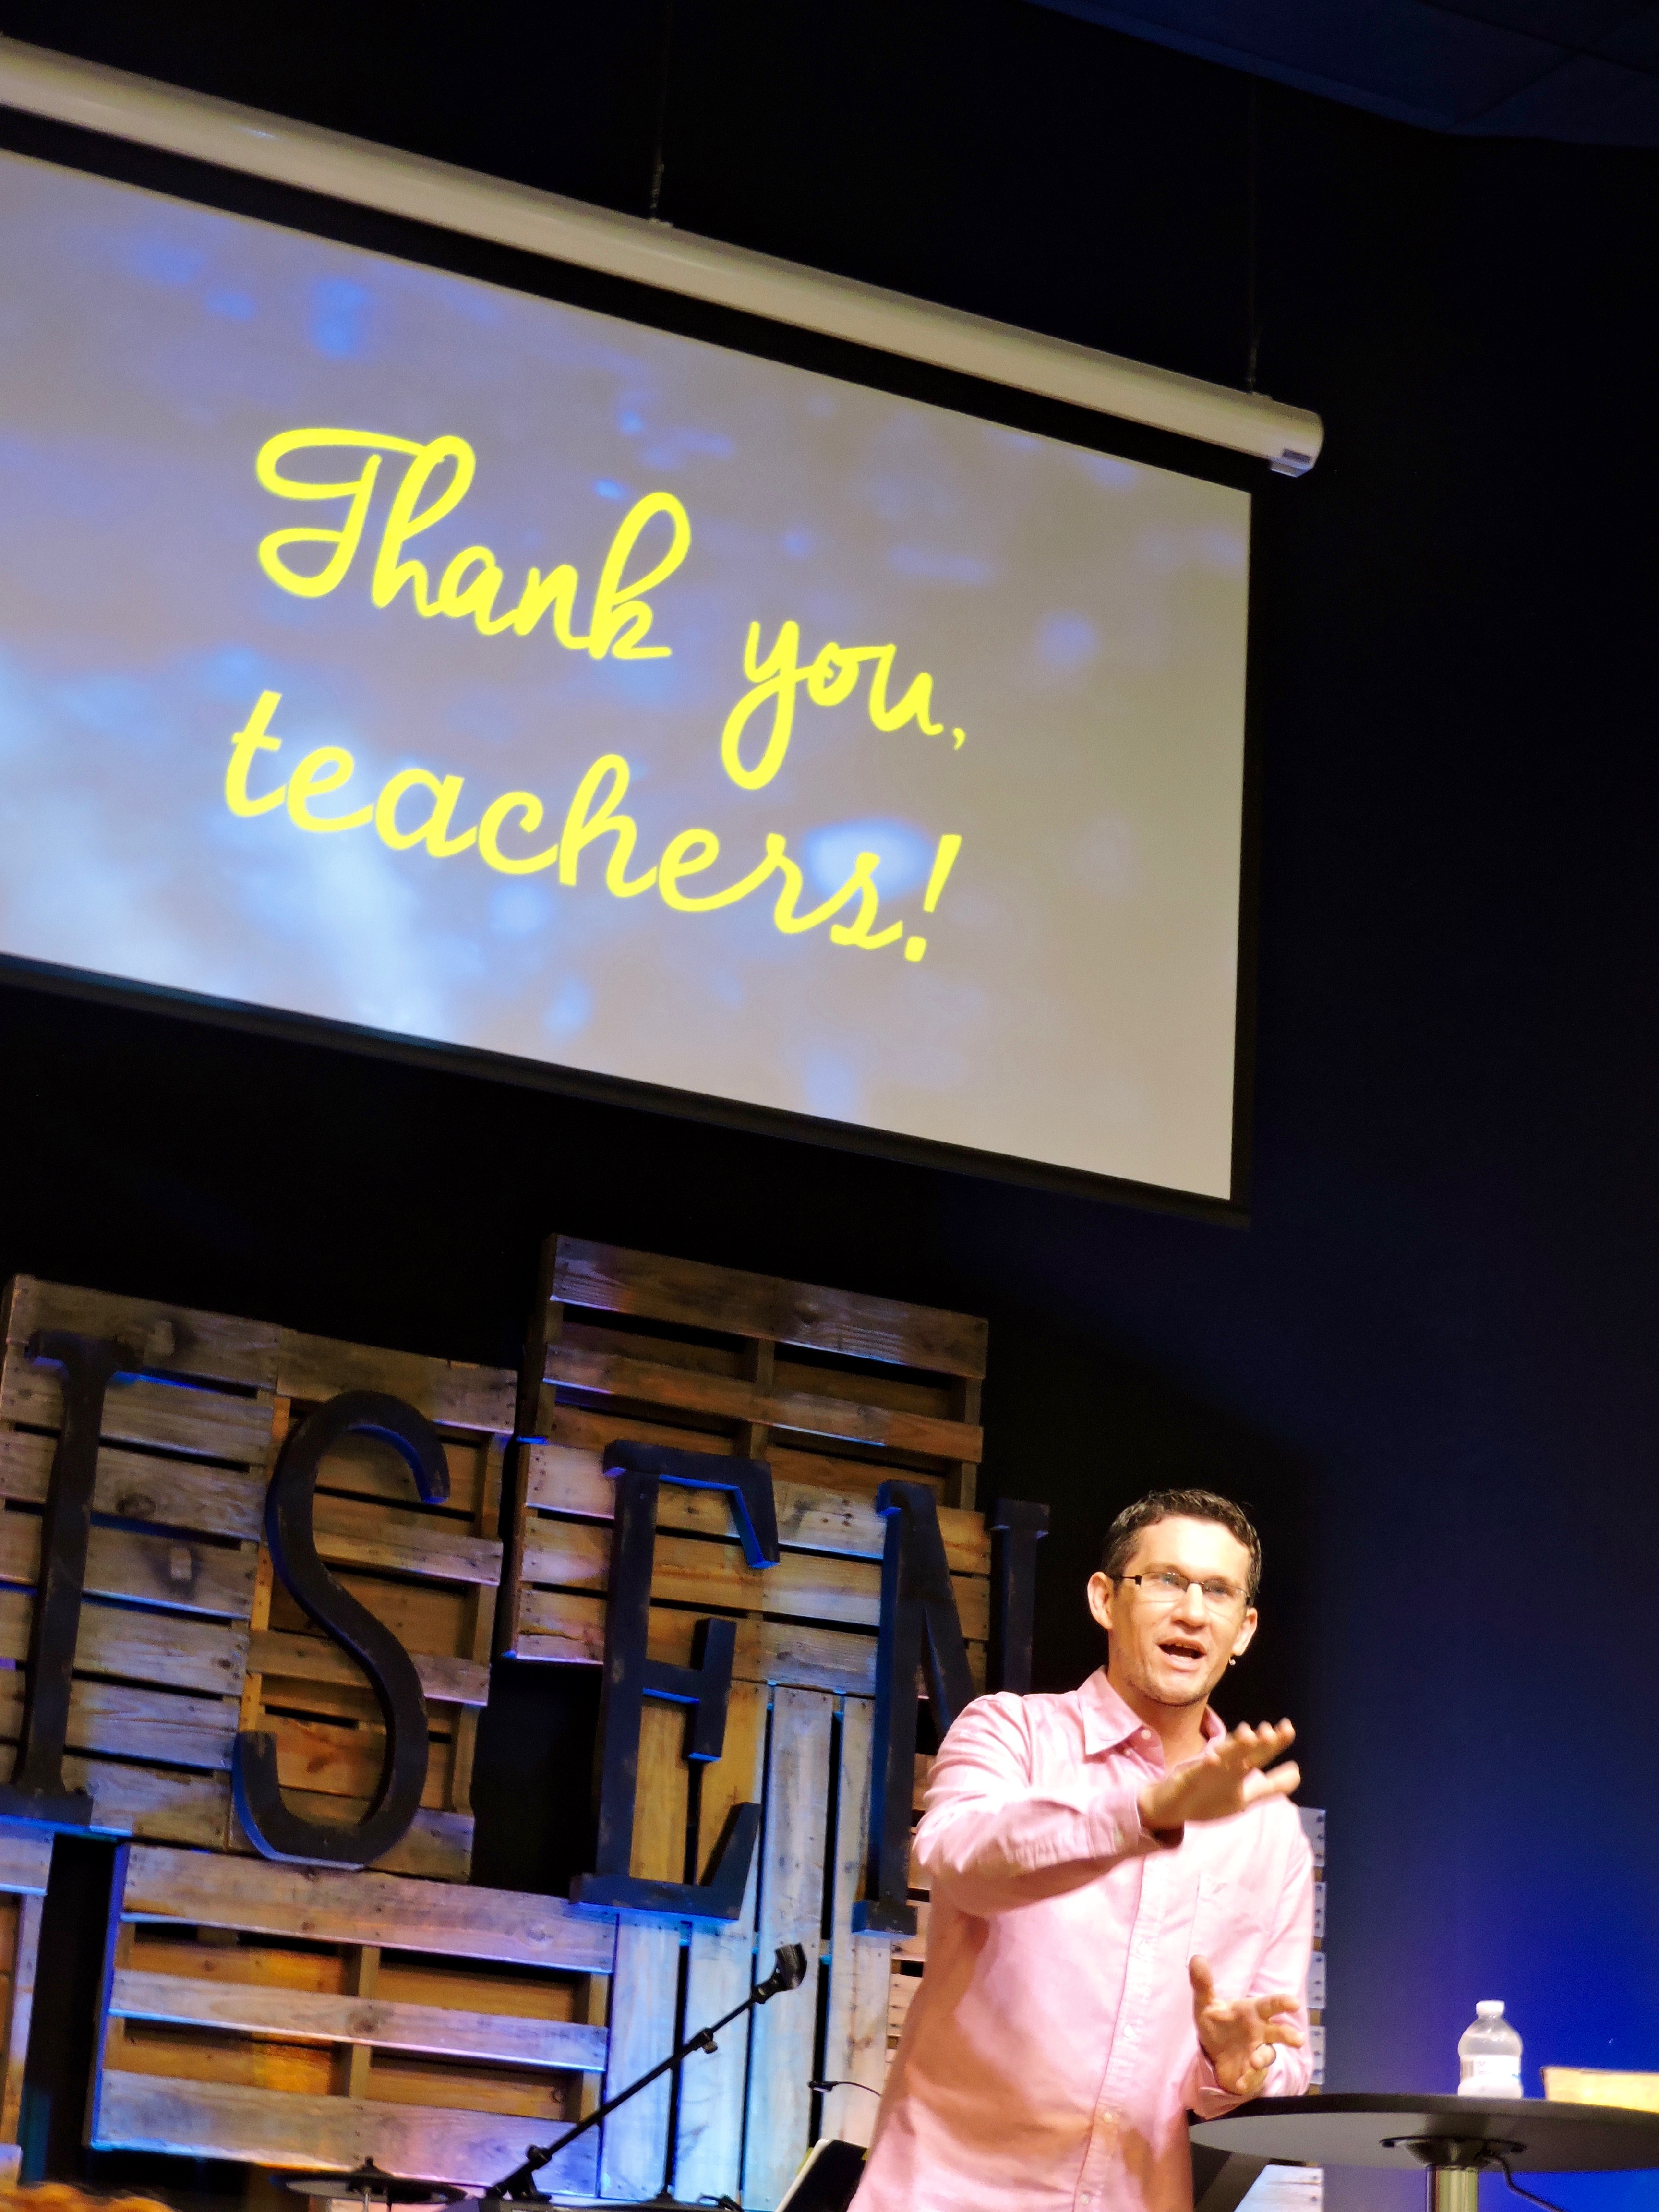 Pastor shows Teacher's appreciation during service